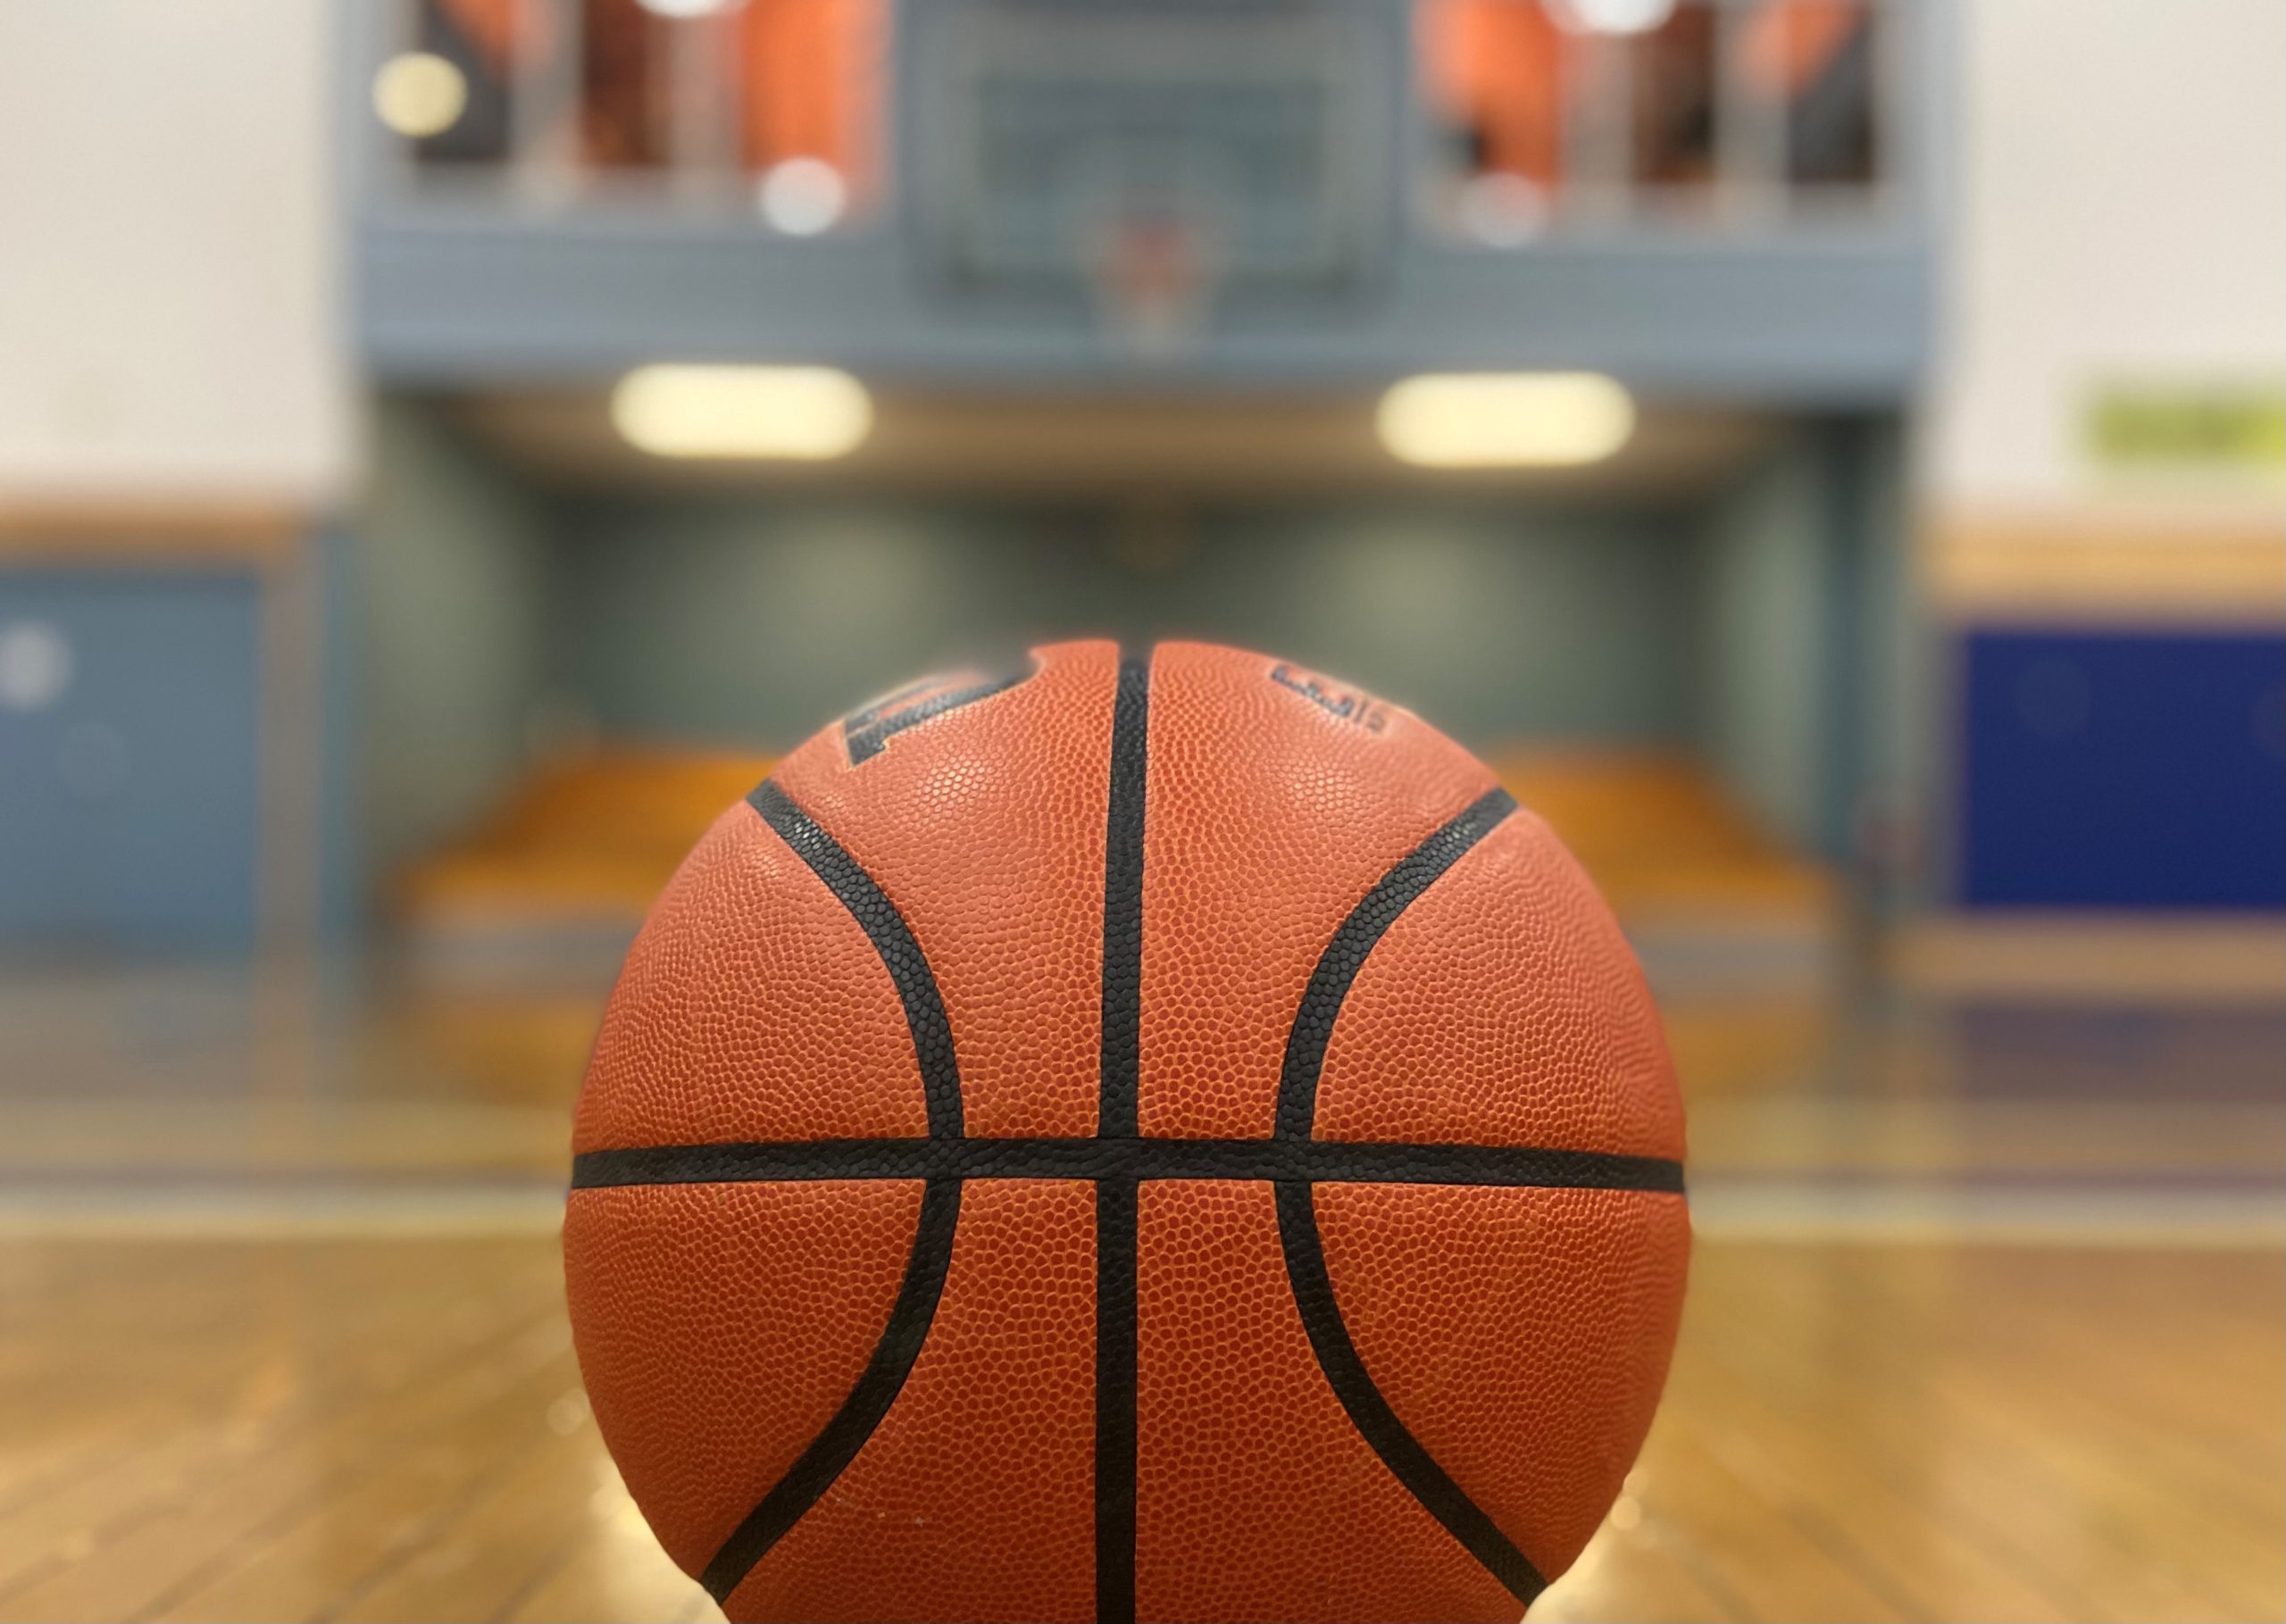 A basketball is seen on a basketball court.